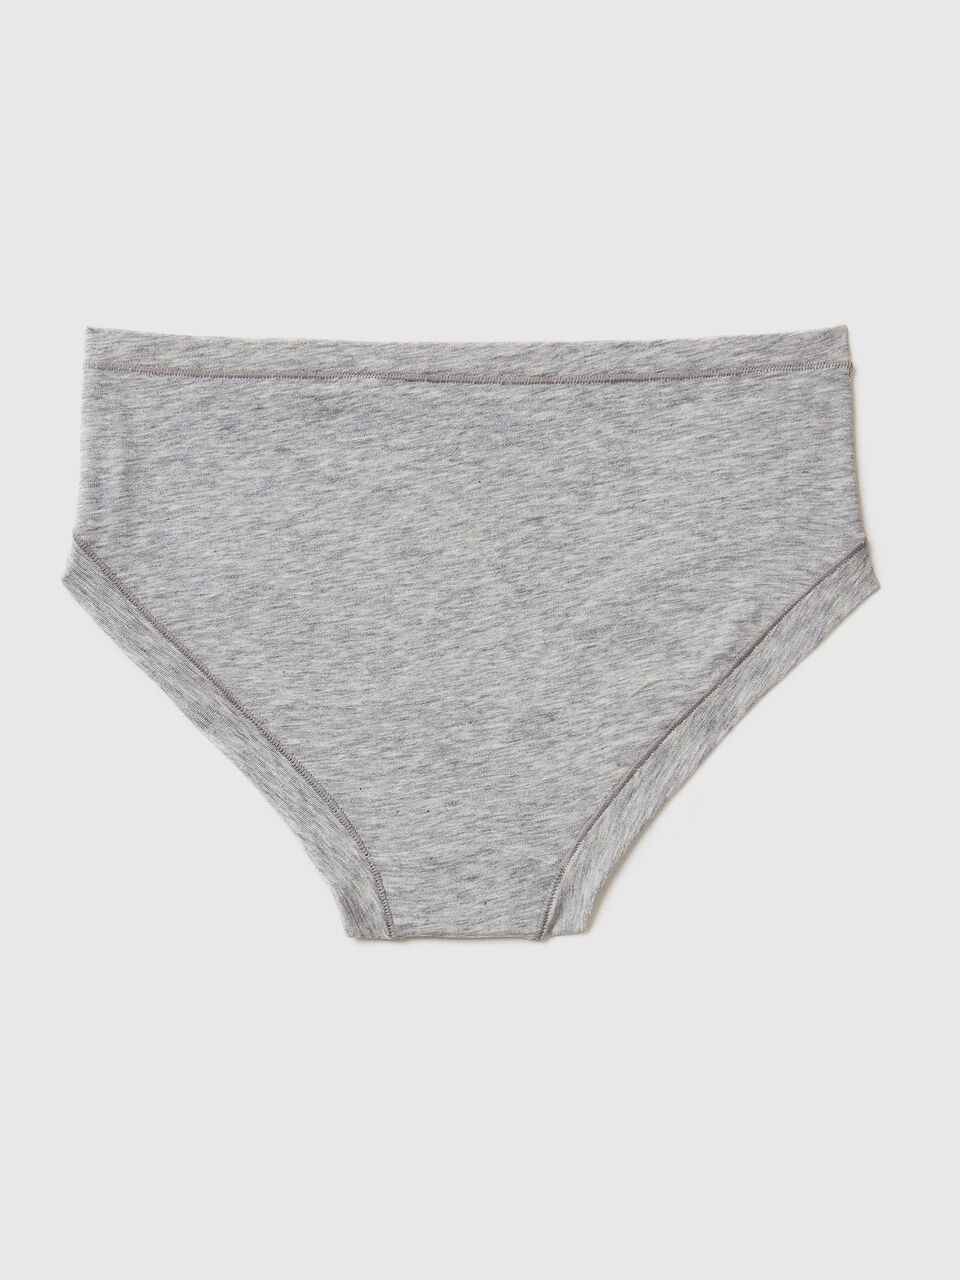 KaLI_store Ladies Panties Women's Cotton Stretch Underwear Soft Mid Rise  Briefs Underpants Grey,L 